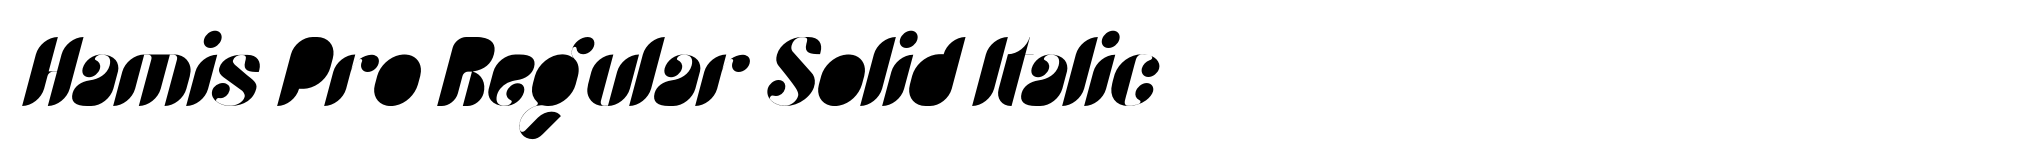 Hamis Pro Regular Solid Italic image